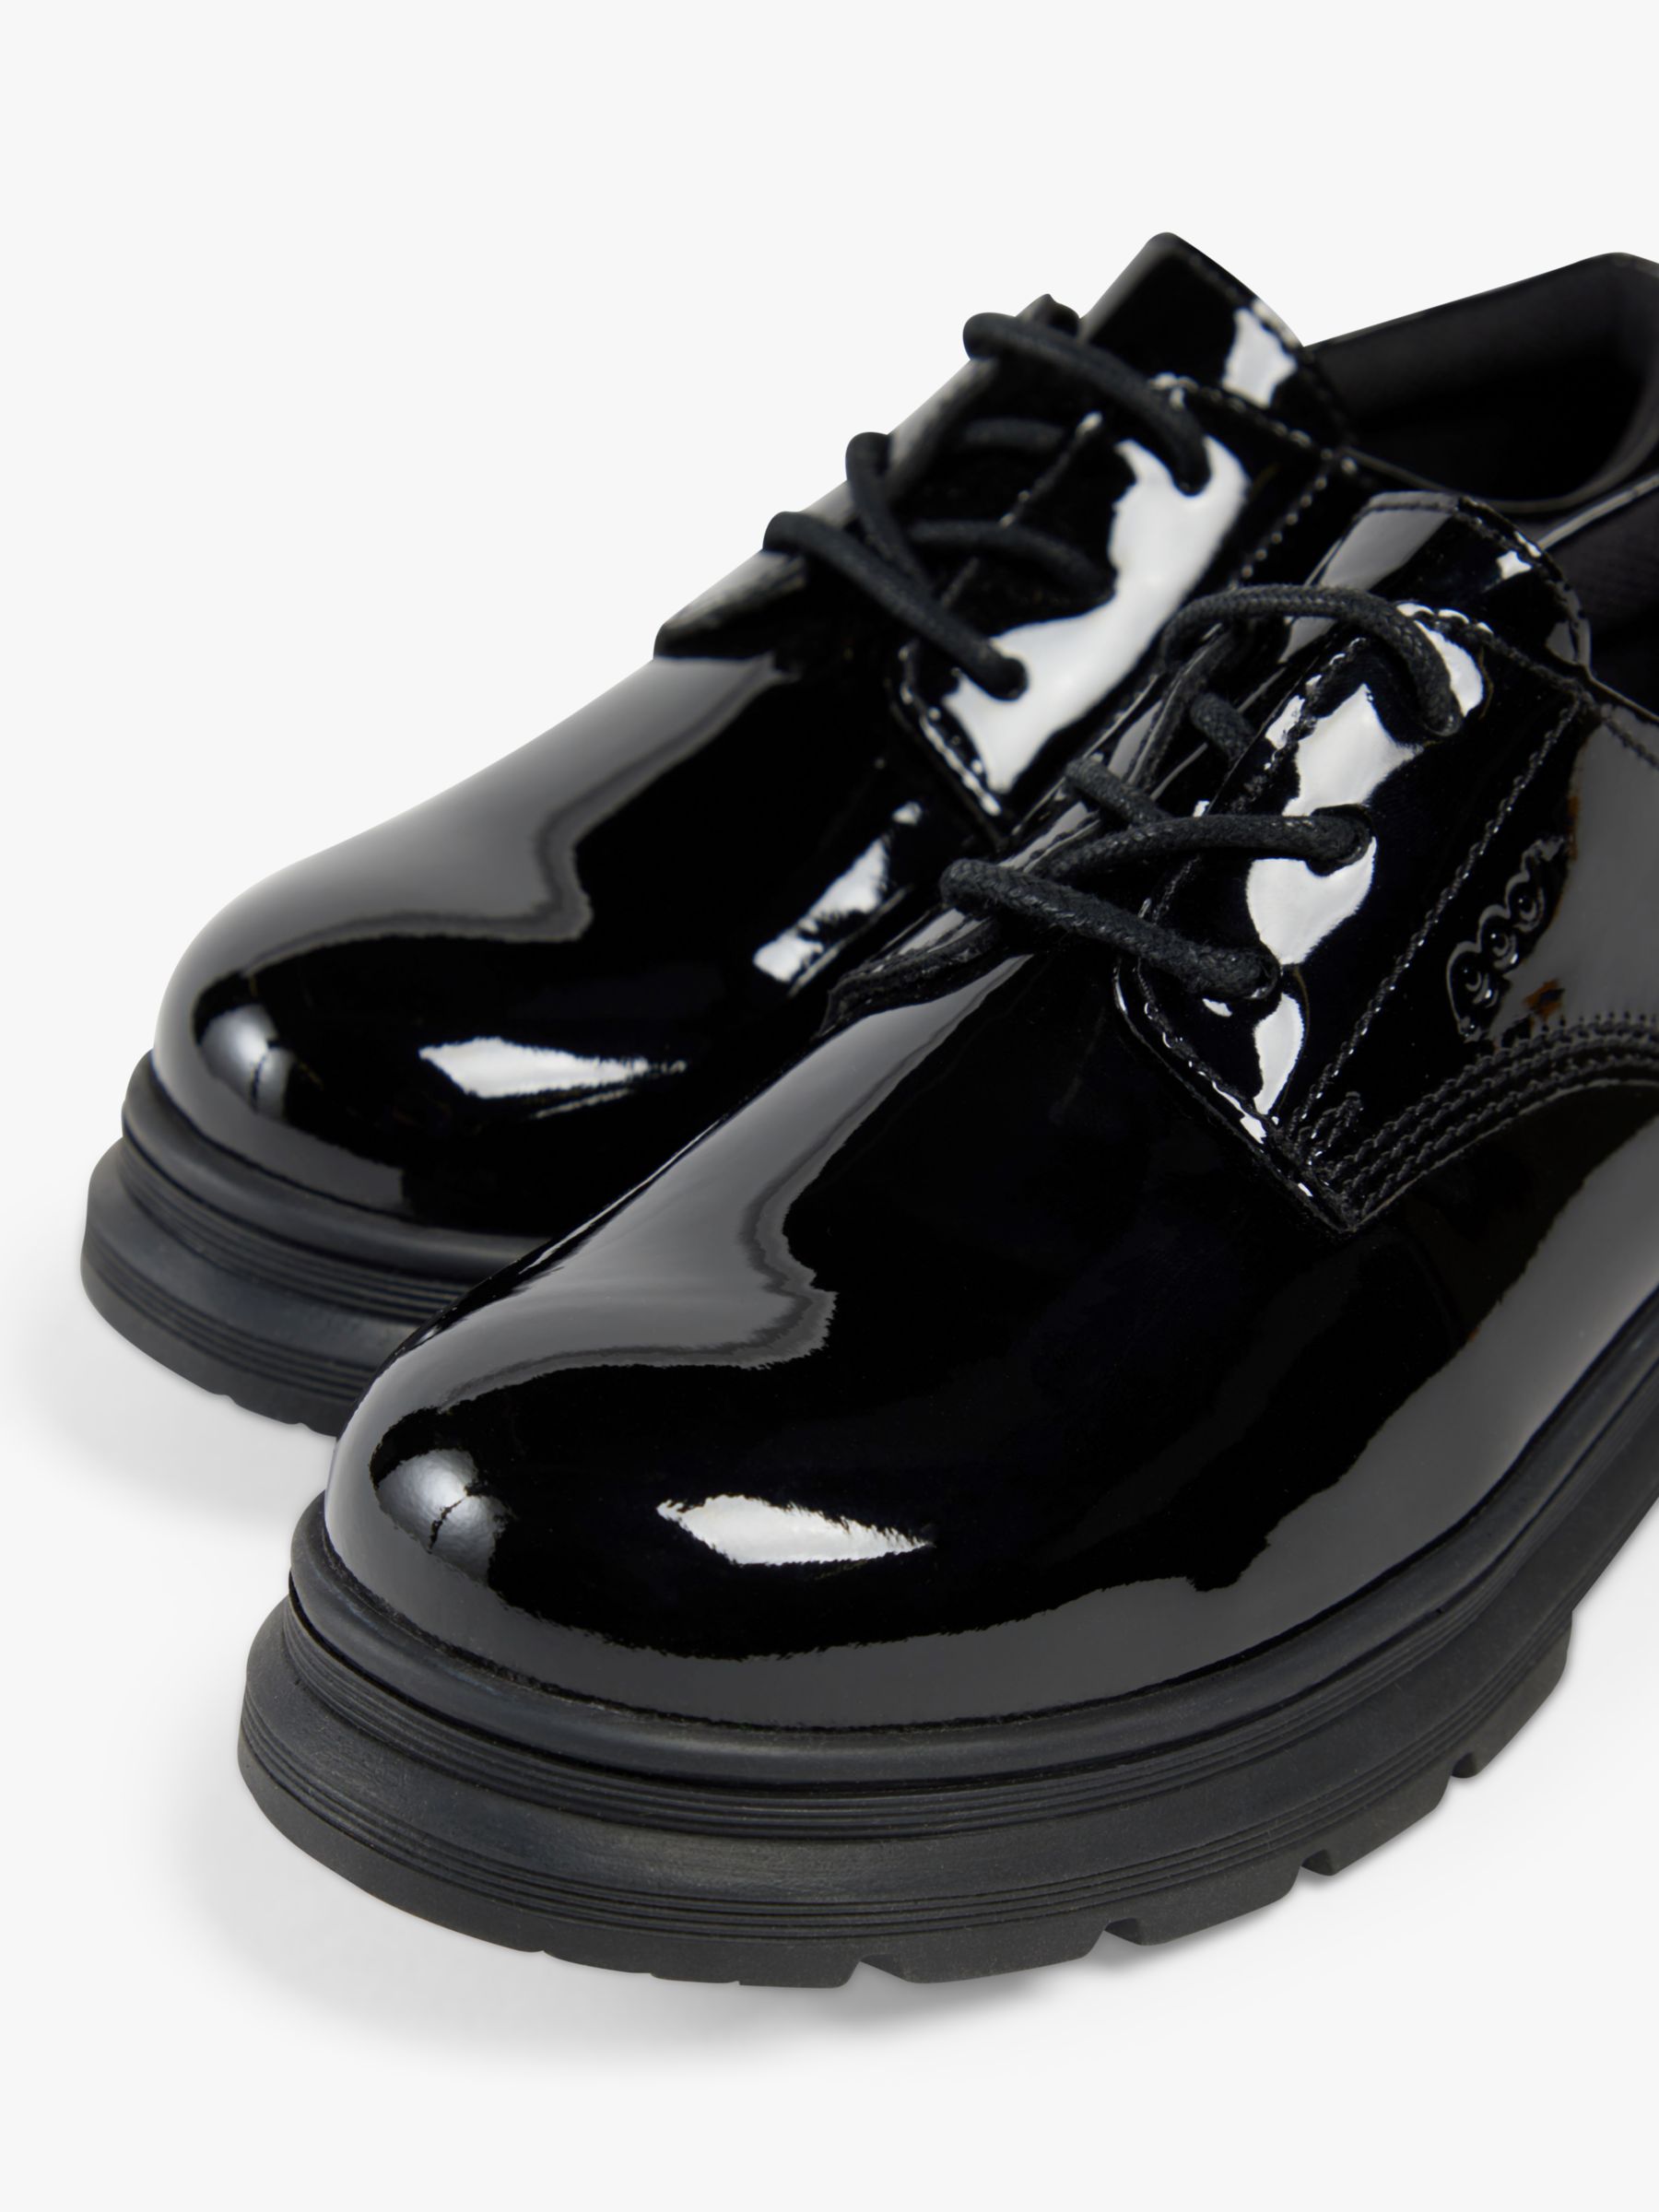 Pod Kids' Irene Patent Leather Lace Up Shoes, Black, 5